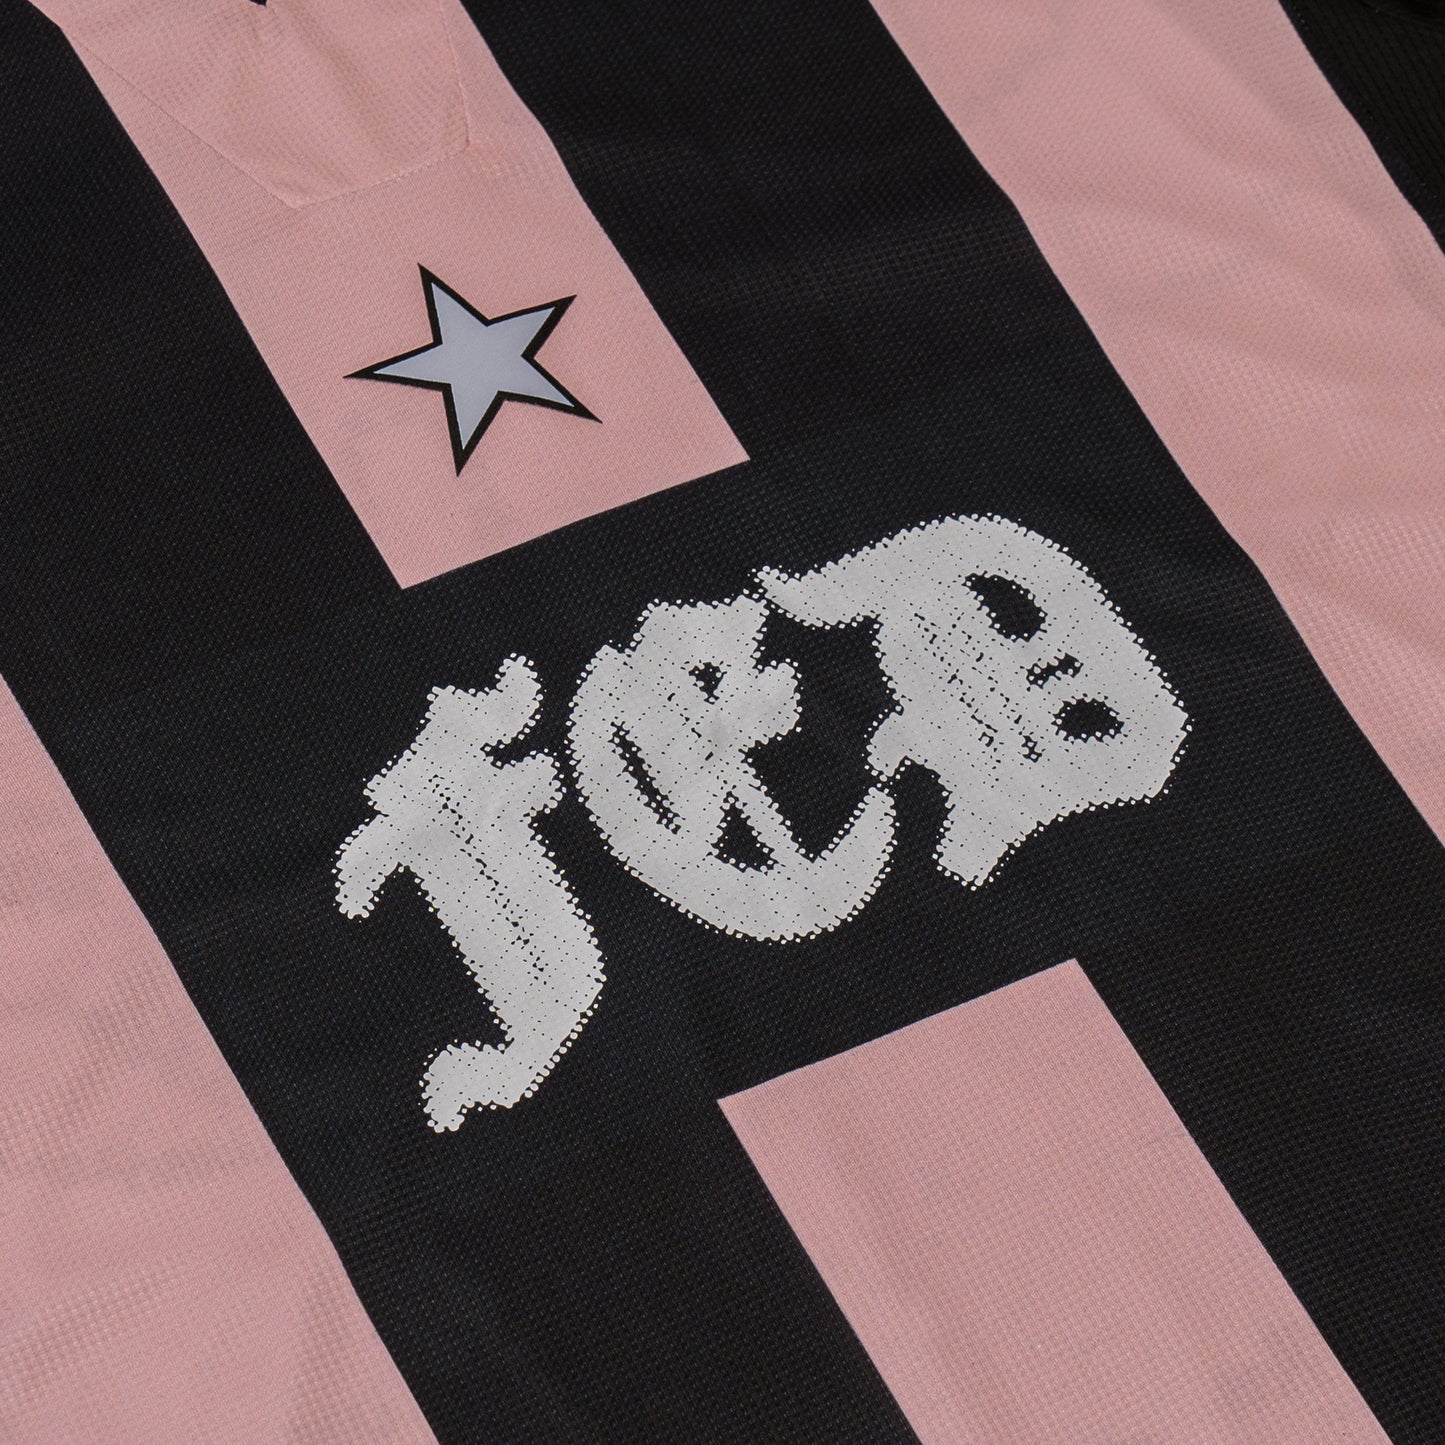 FED PUNK Jersey (Black/Pink)